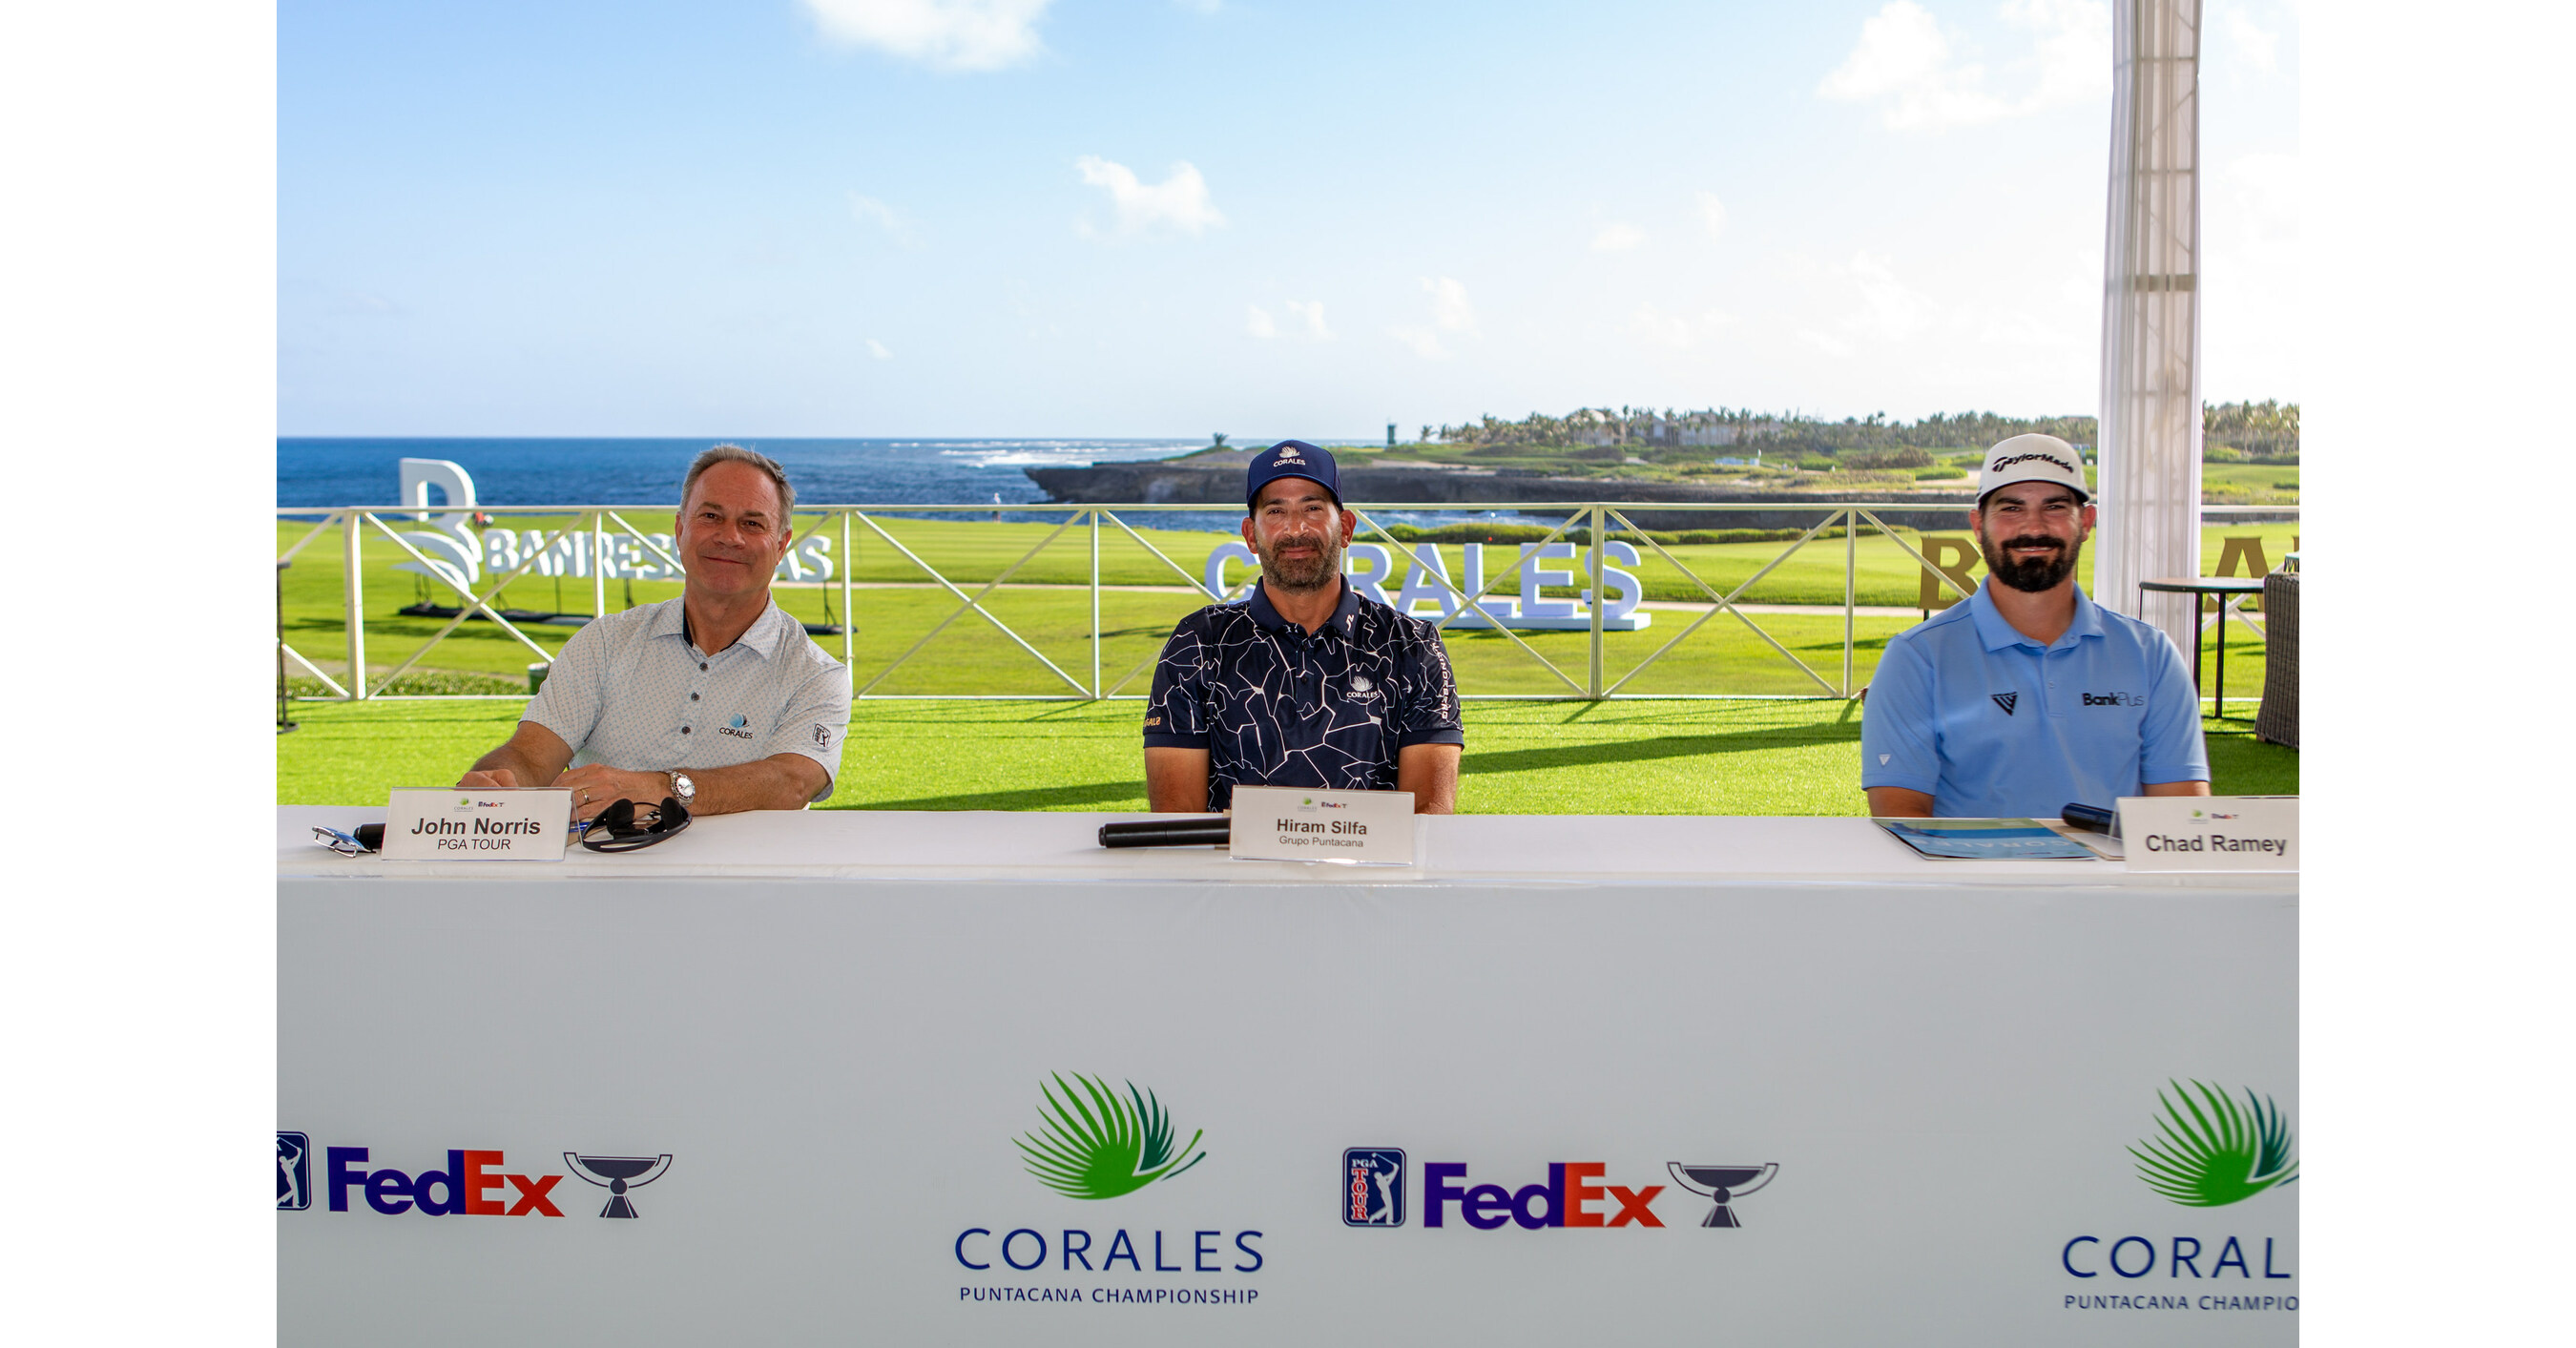 2023 Corales Puntacana Championship PGA TOUR begins the most important